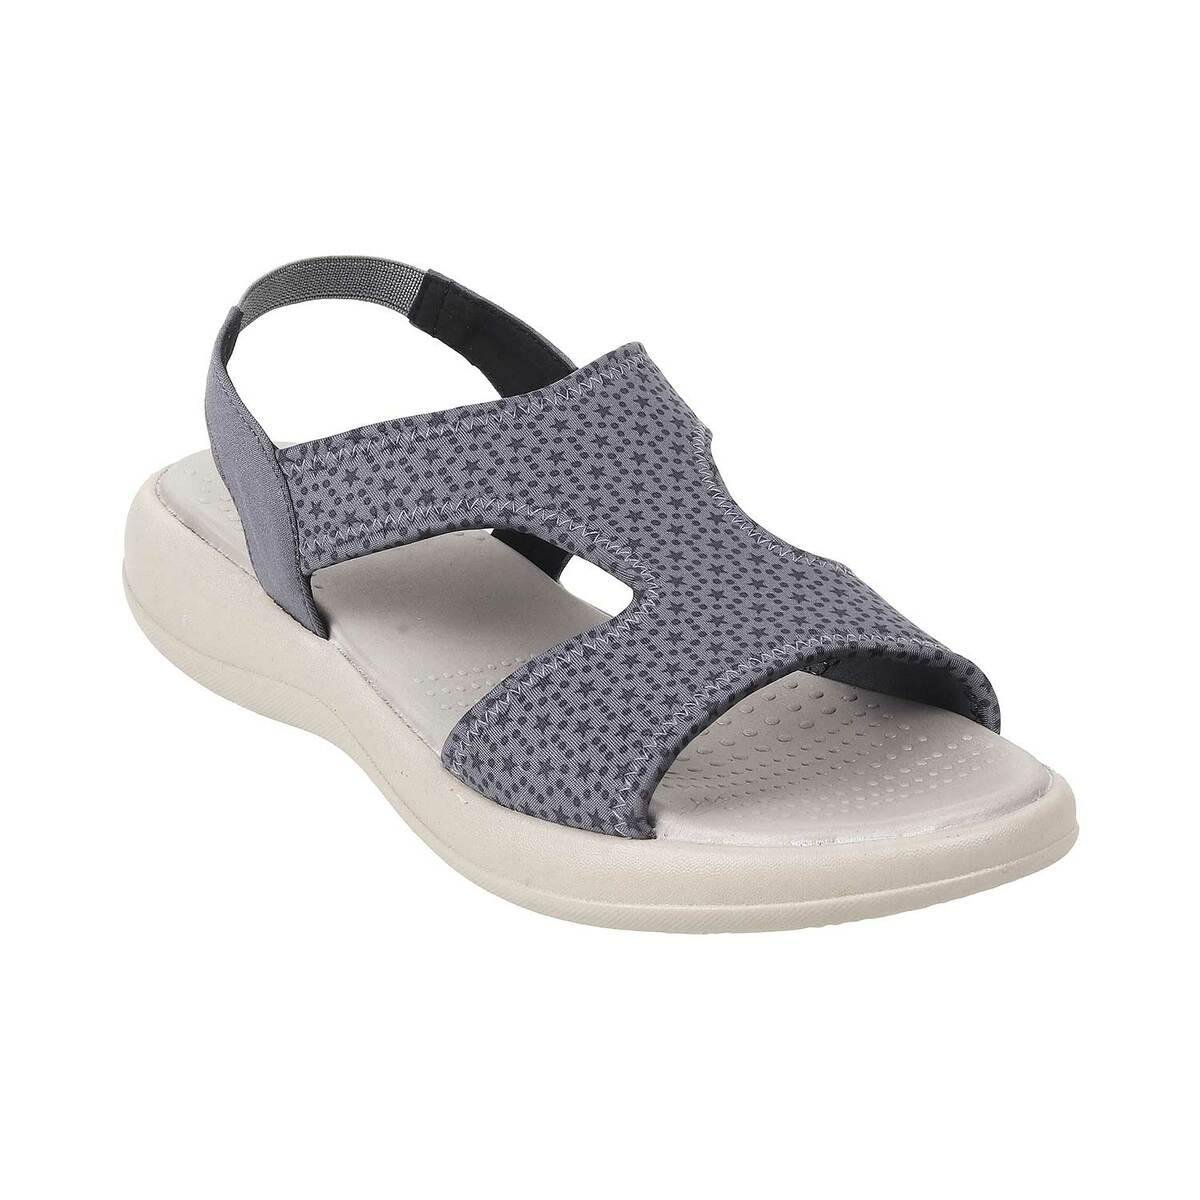 Buy Men Black Casual Sandals Online | SKU: 18-1602-11-40-Metro Shoes